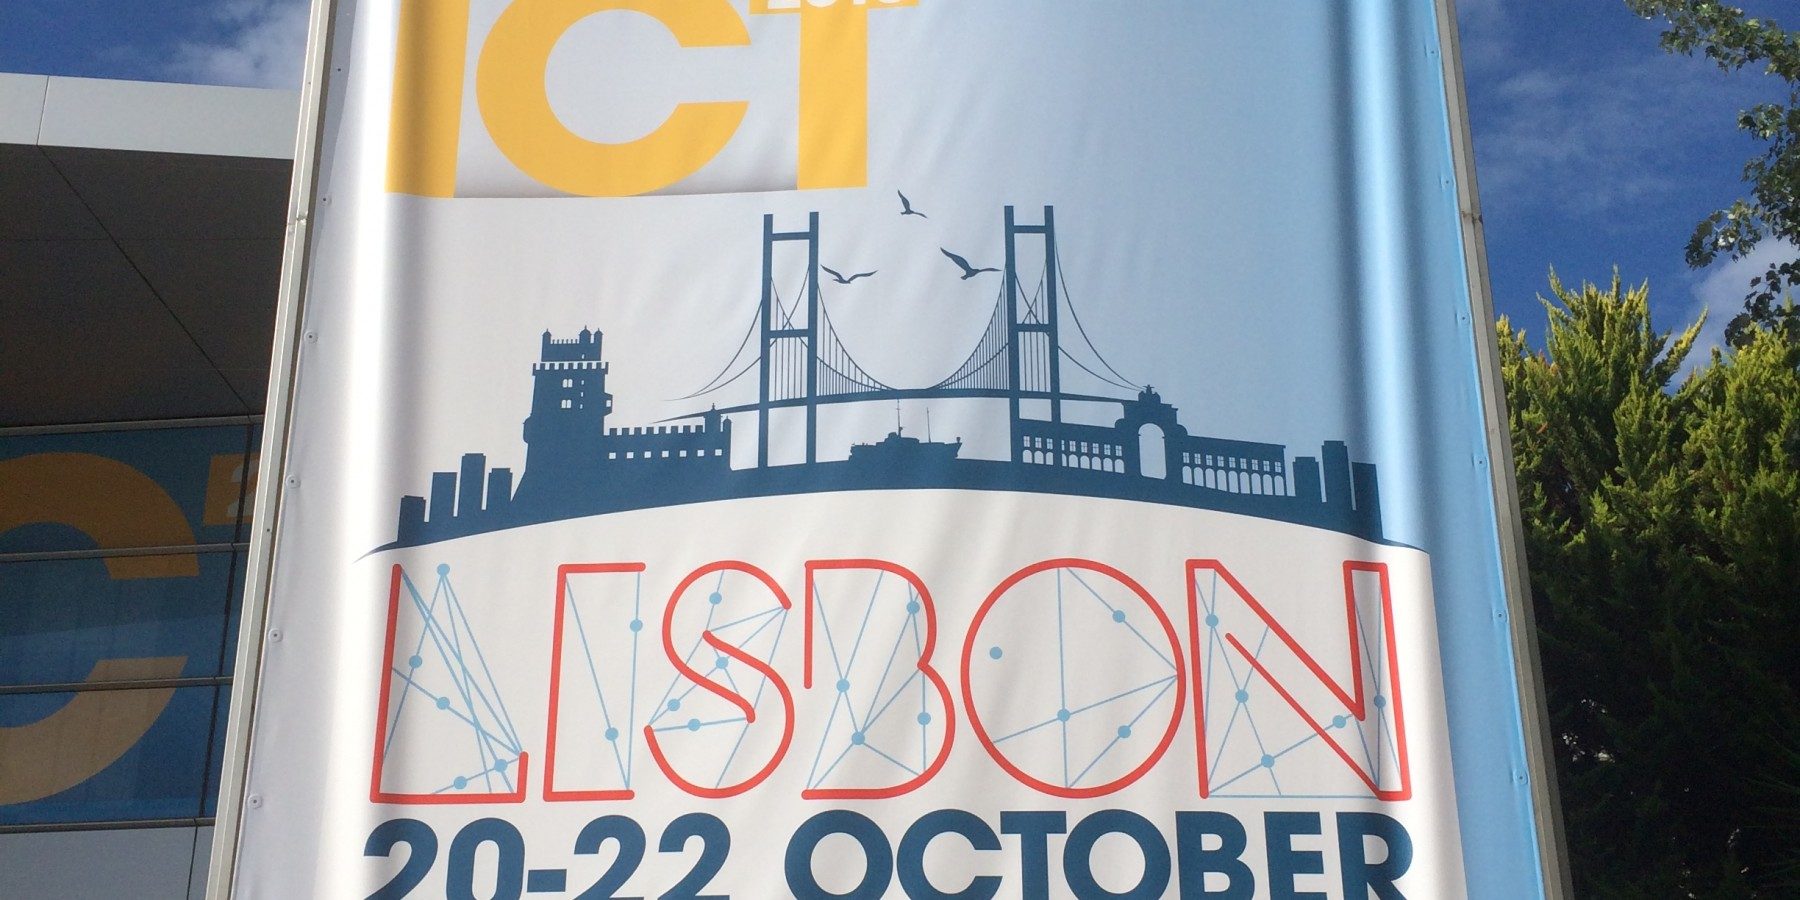 ICT2015 in Lisbon